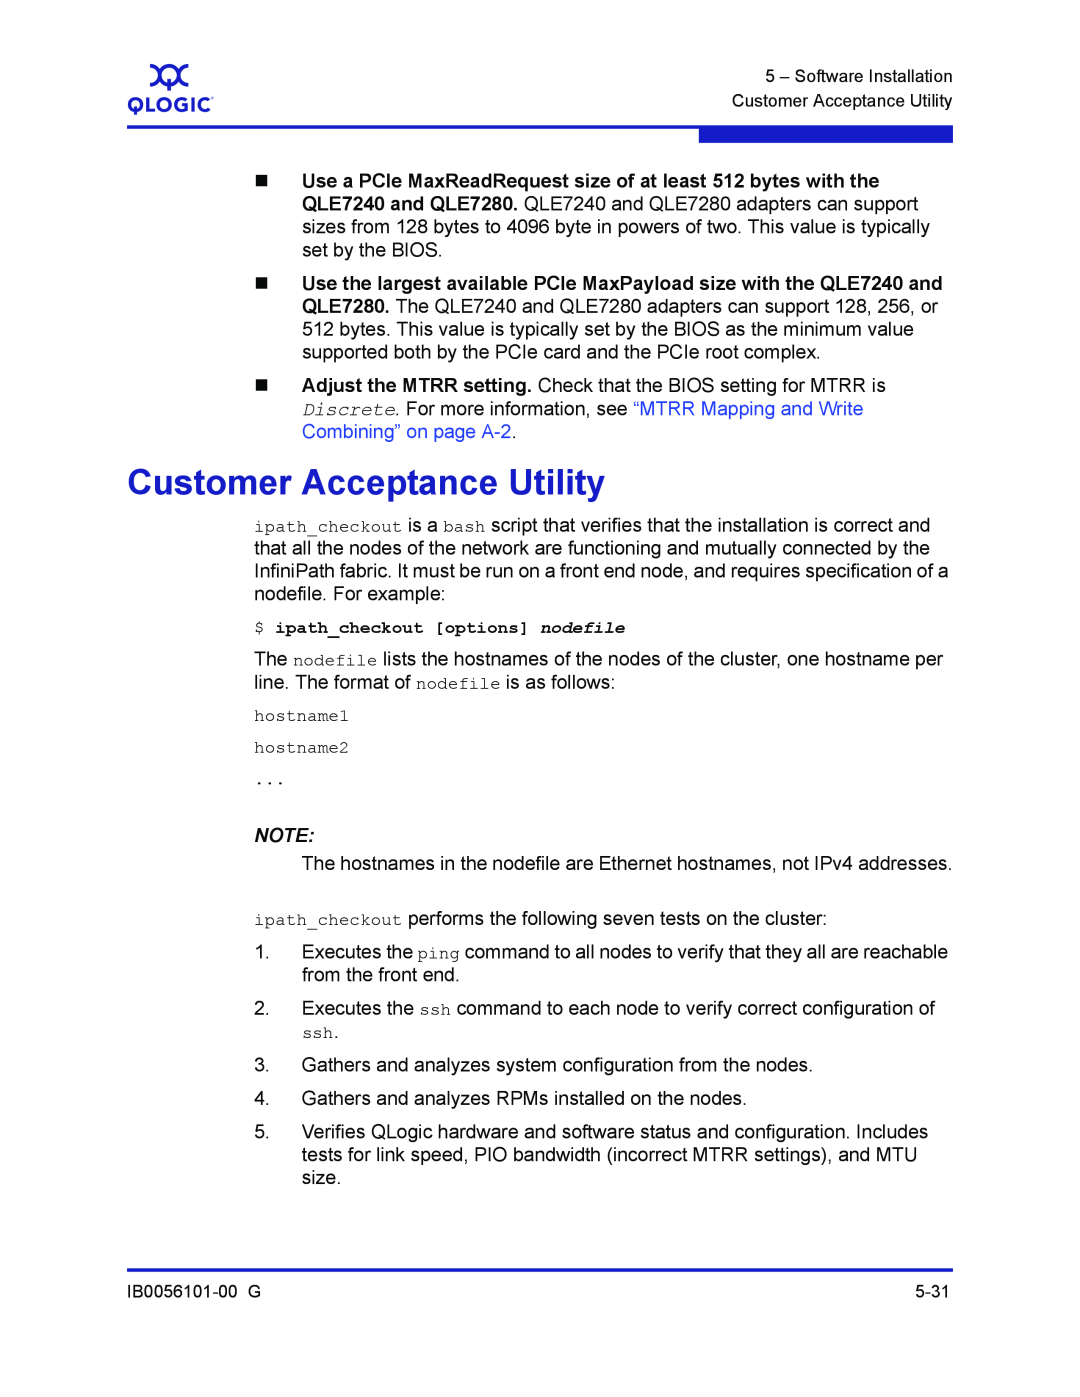 Q-Logic IB0056101-00 G manual Customer Acceptance Utility 